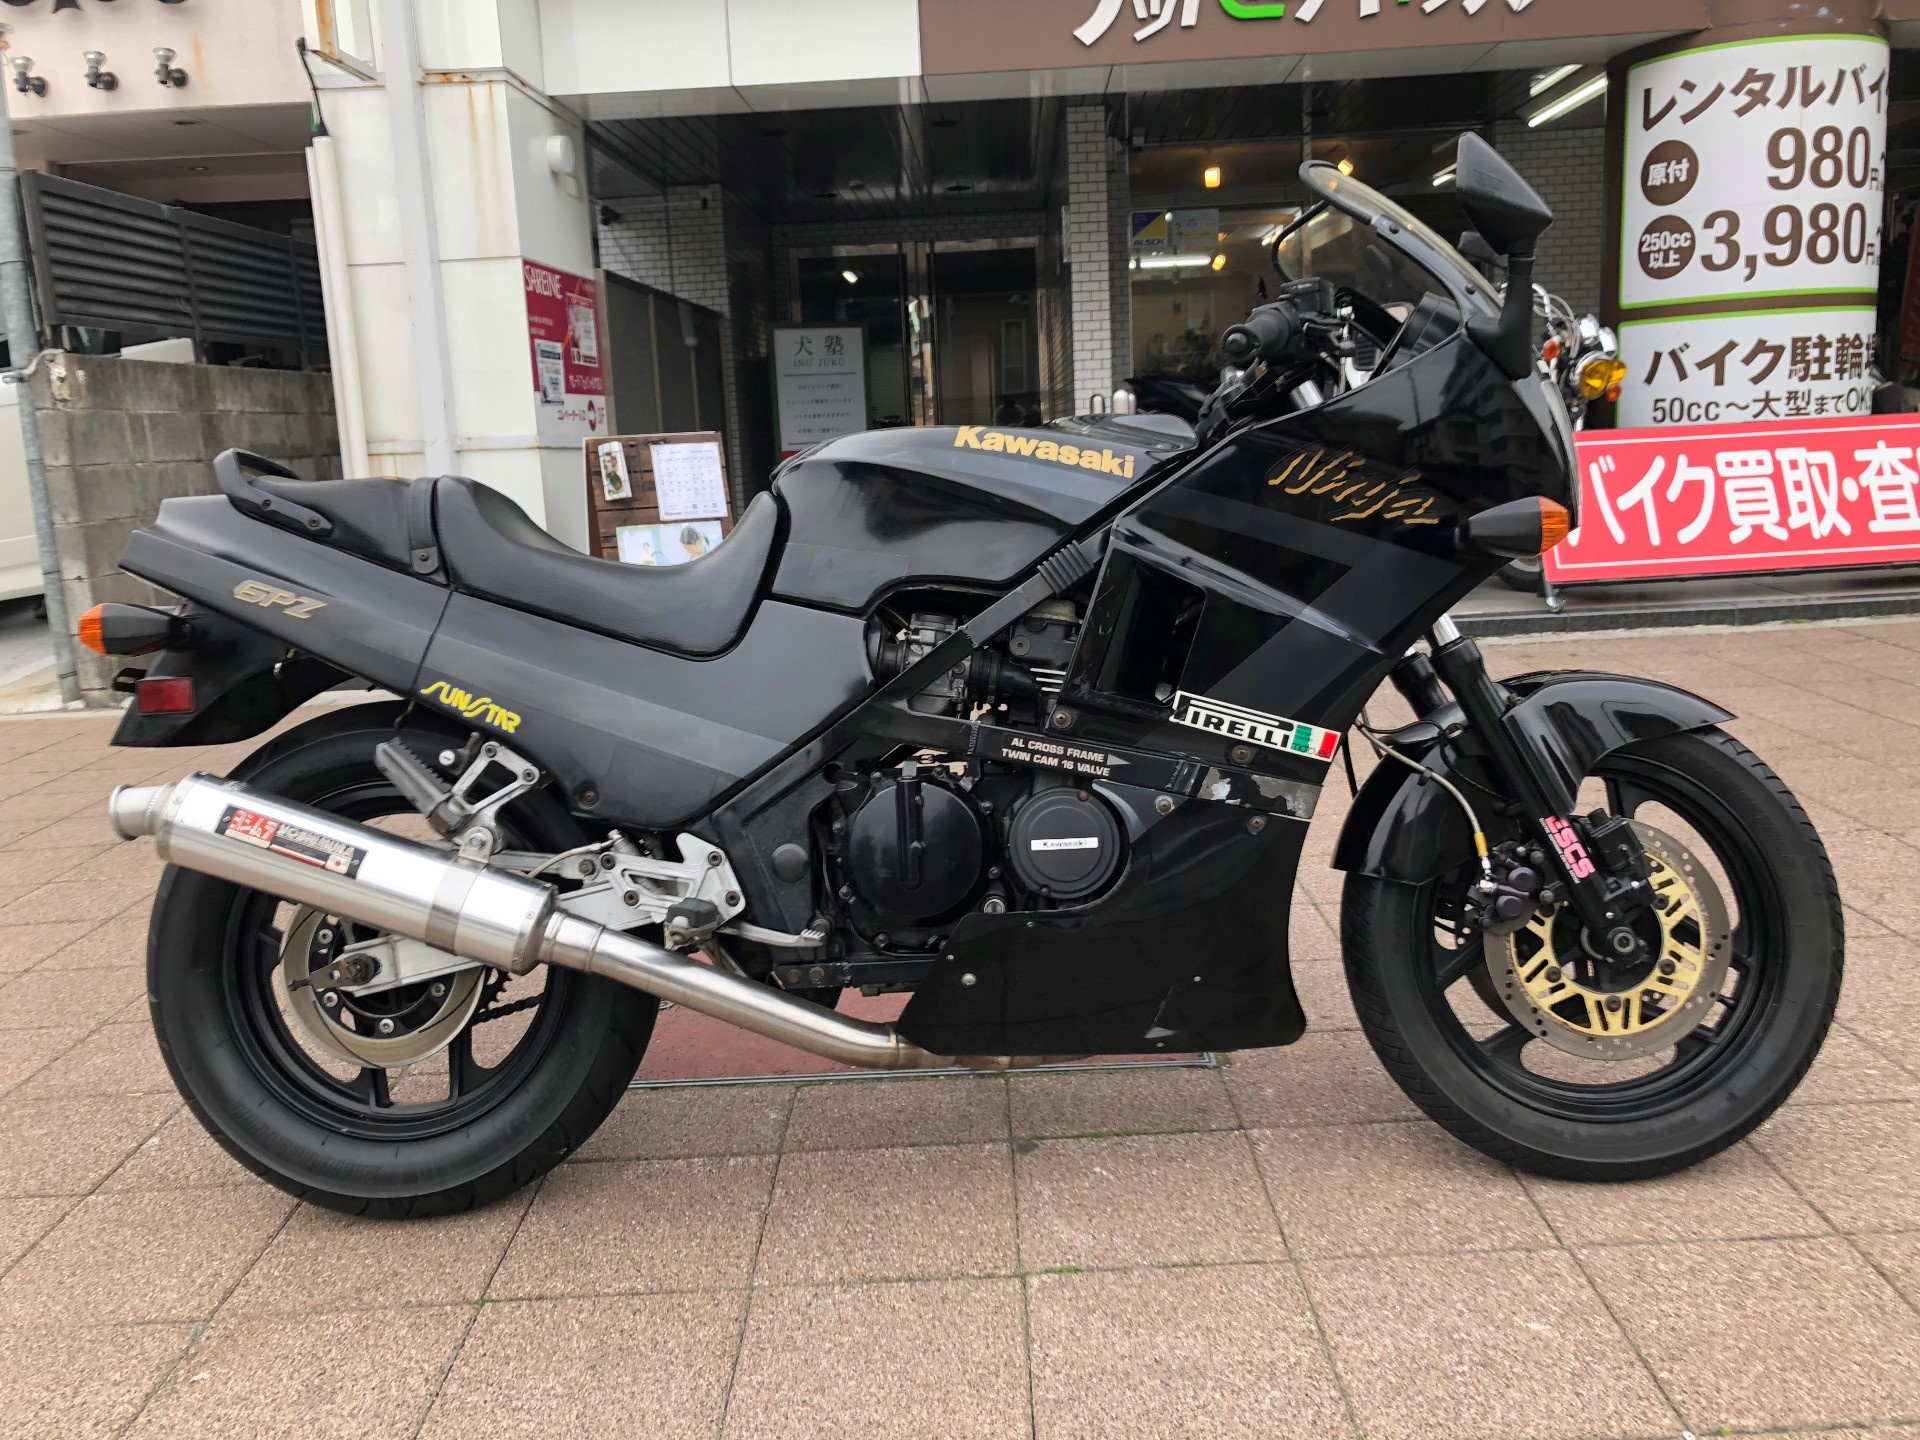 Обзор мотоцикла kawasaki gpz 400 (gpz400r)